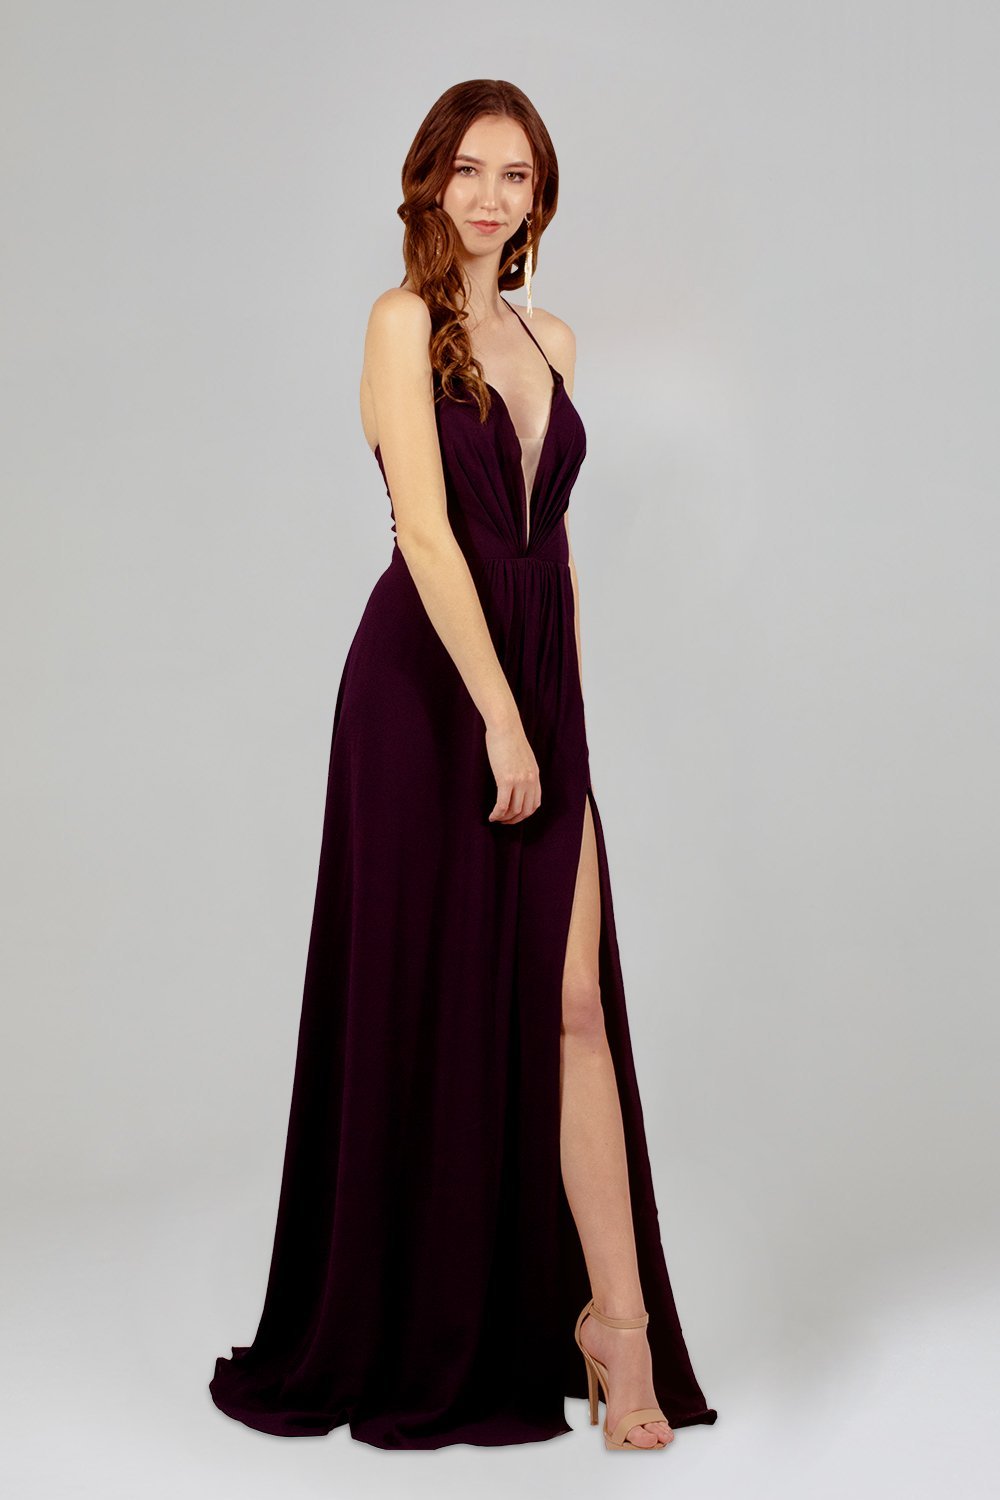 custom colour purple bridesmaid dresses perth australia envious bridal & formal